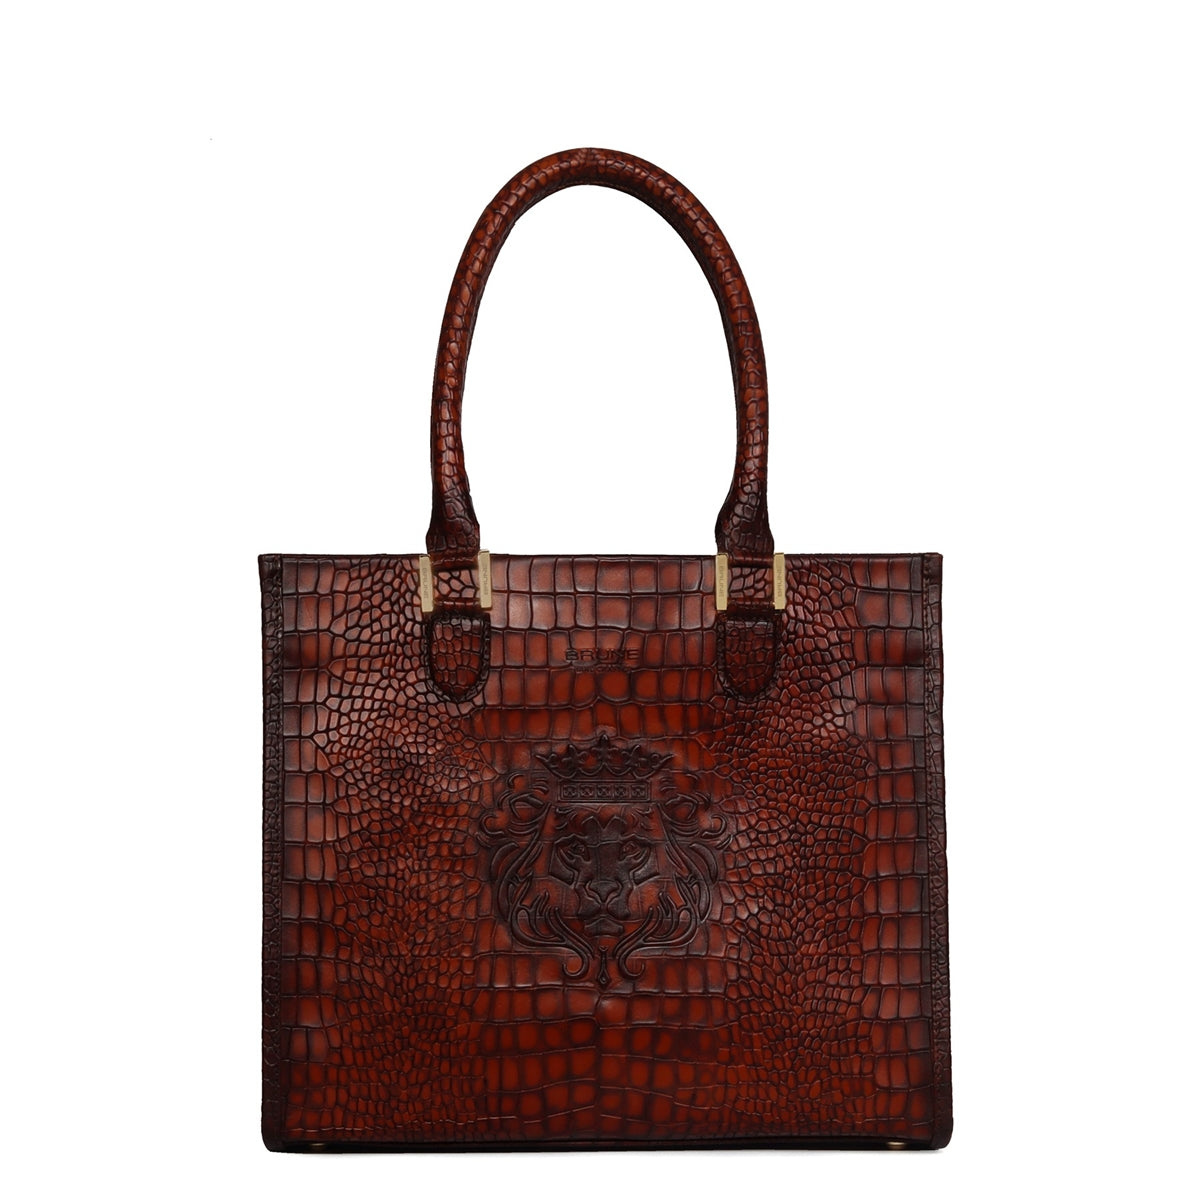 Smokey Finish Medium Hand Bag In Deep Cut Cognac Leather